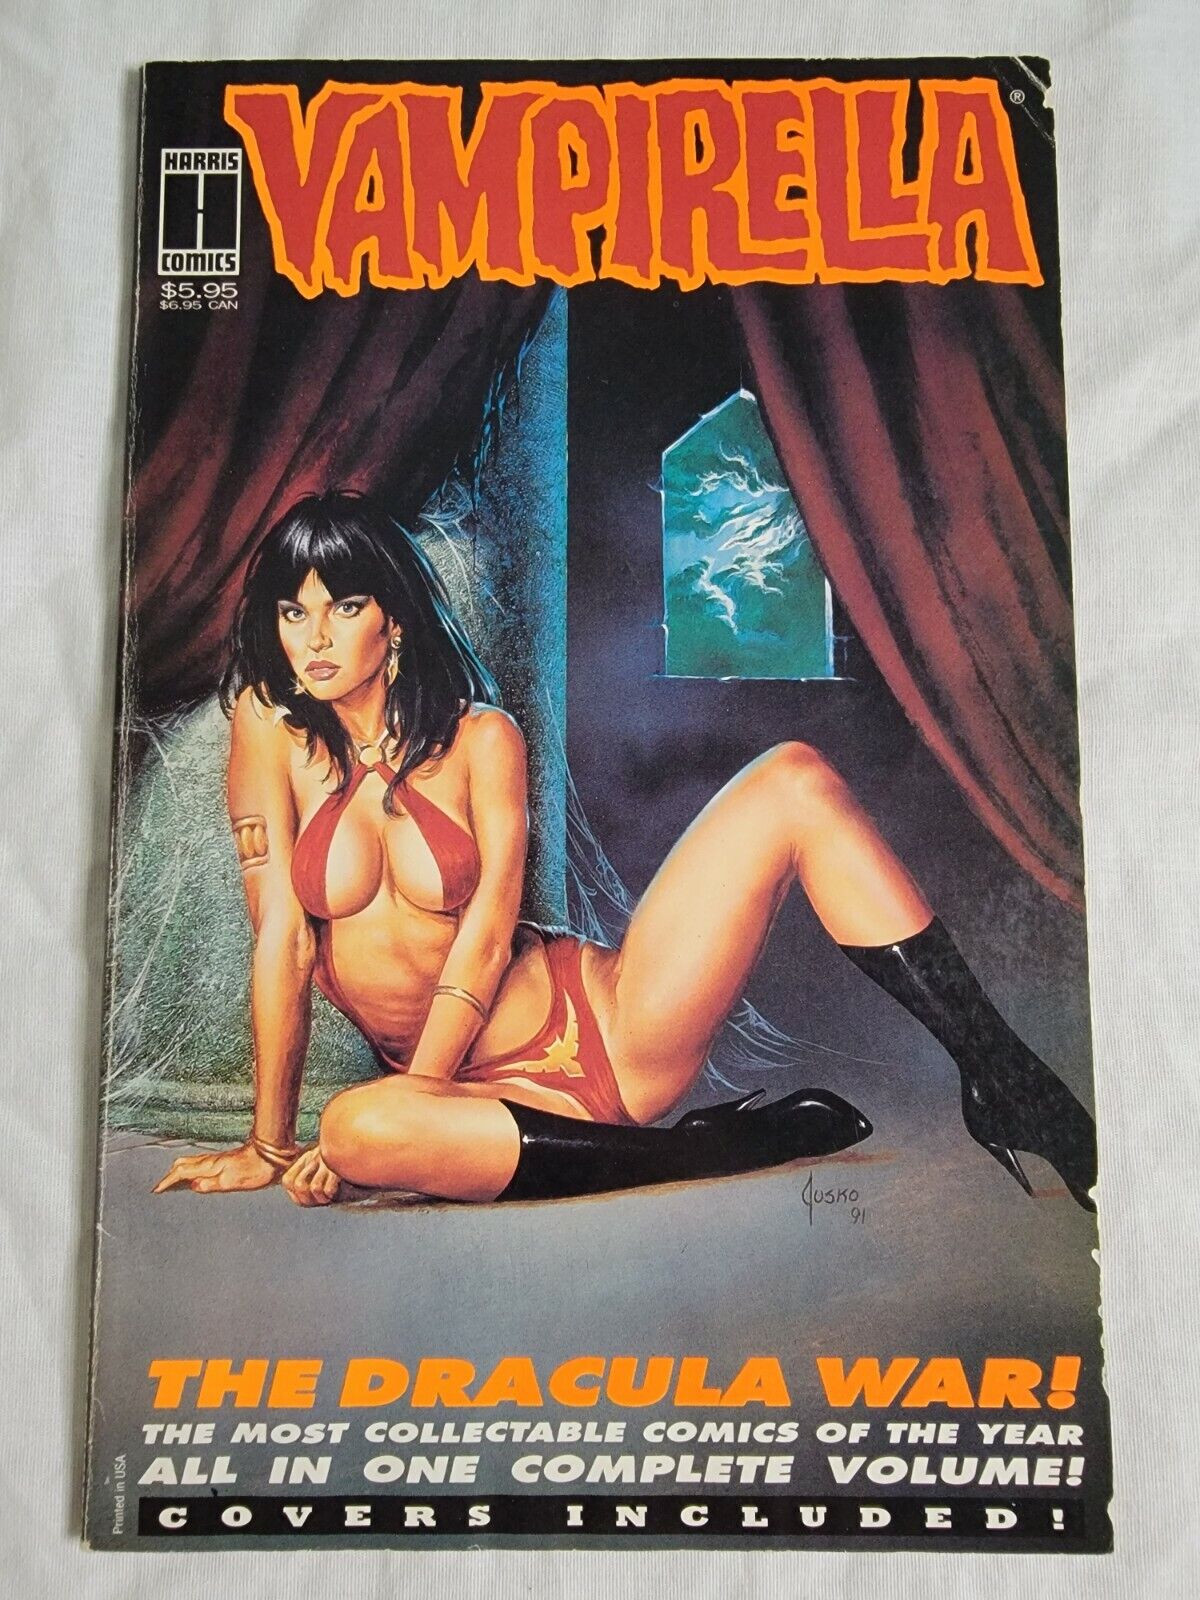 Harris Comics: Vampirella The Dracula War Cover by Jusko TPB : Save on Shipping